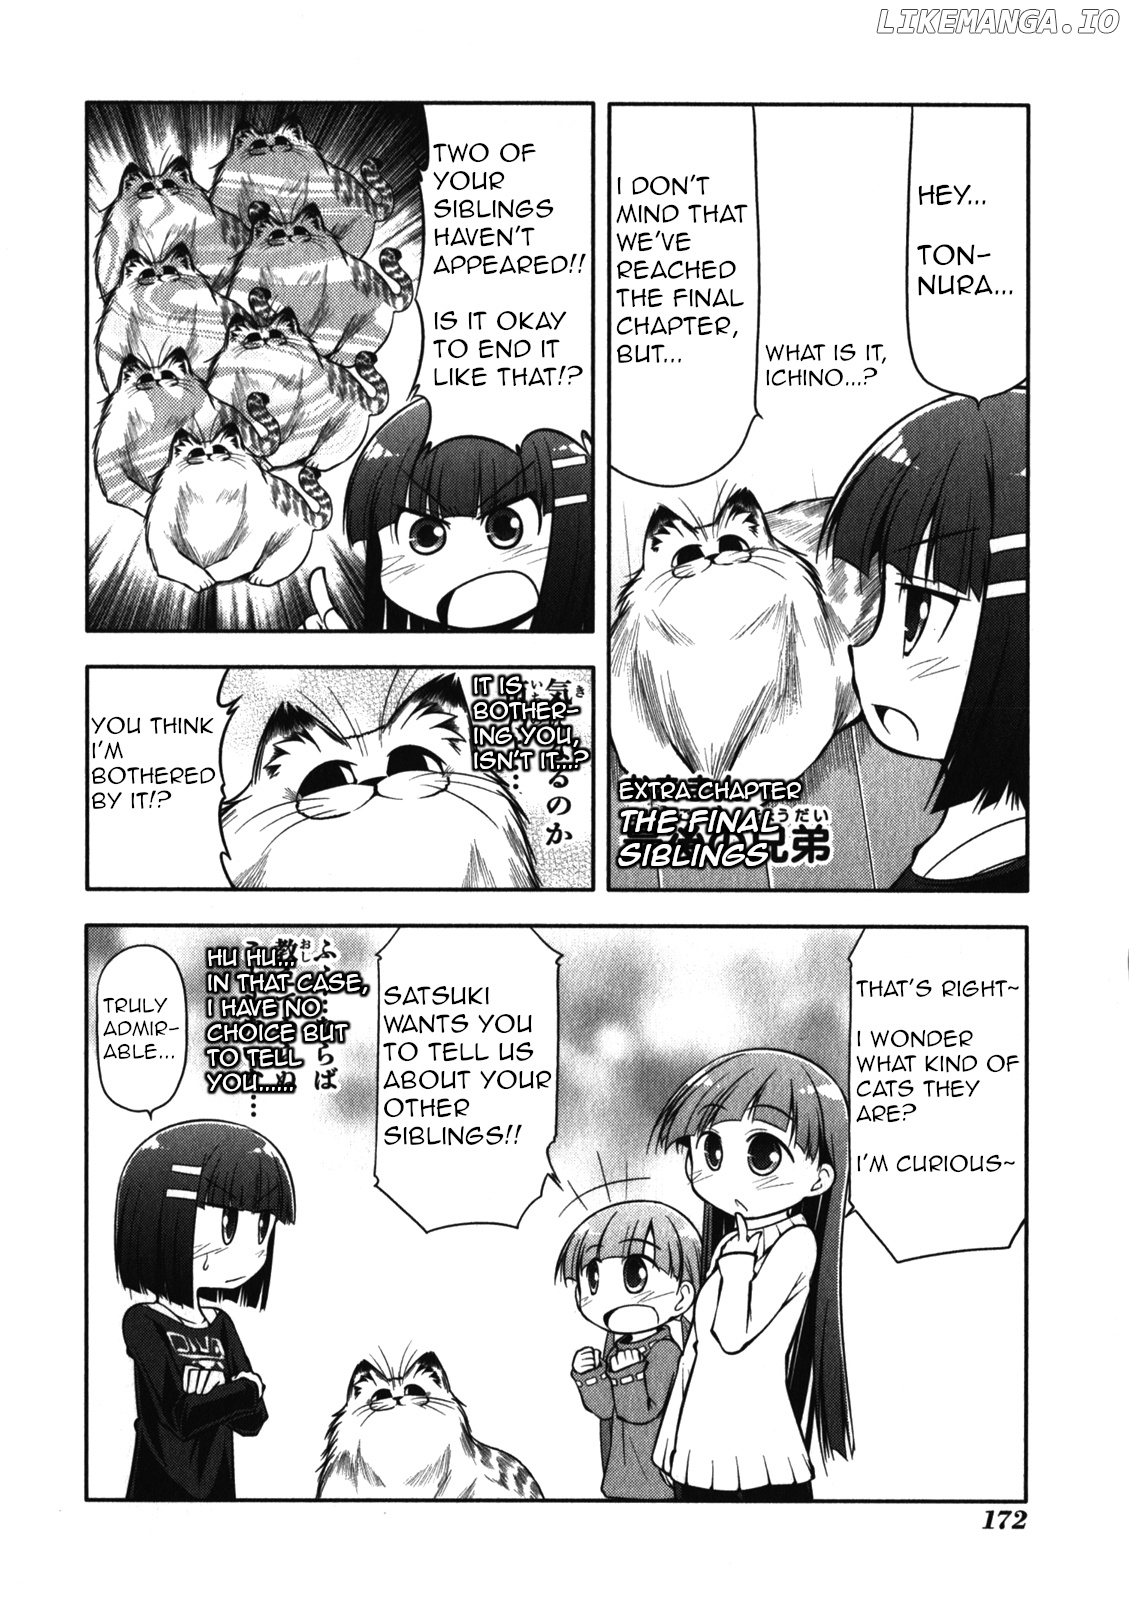 Tonnura-San chapter 51.5 - page 1